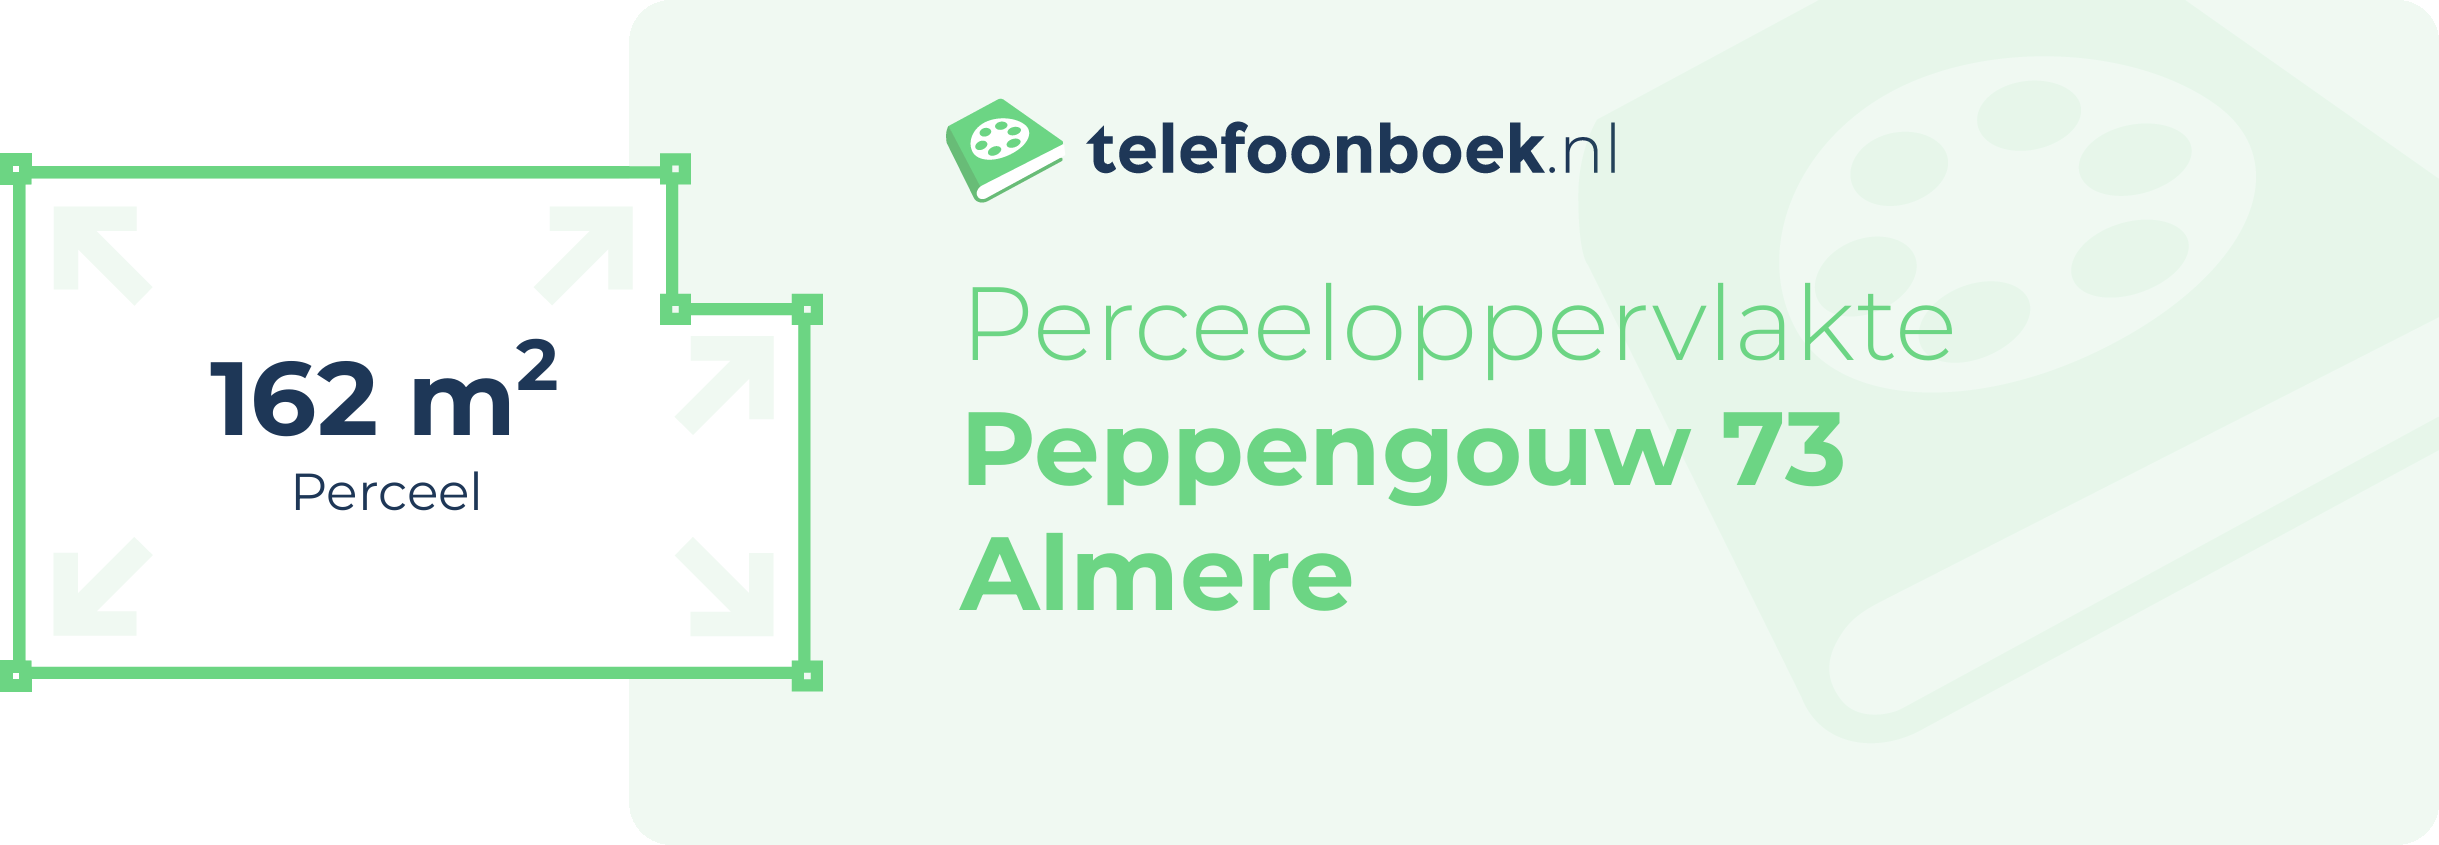 Perceeloppervlakte Peppengouw 73 Almere